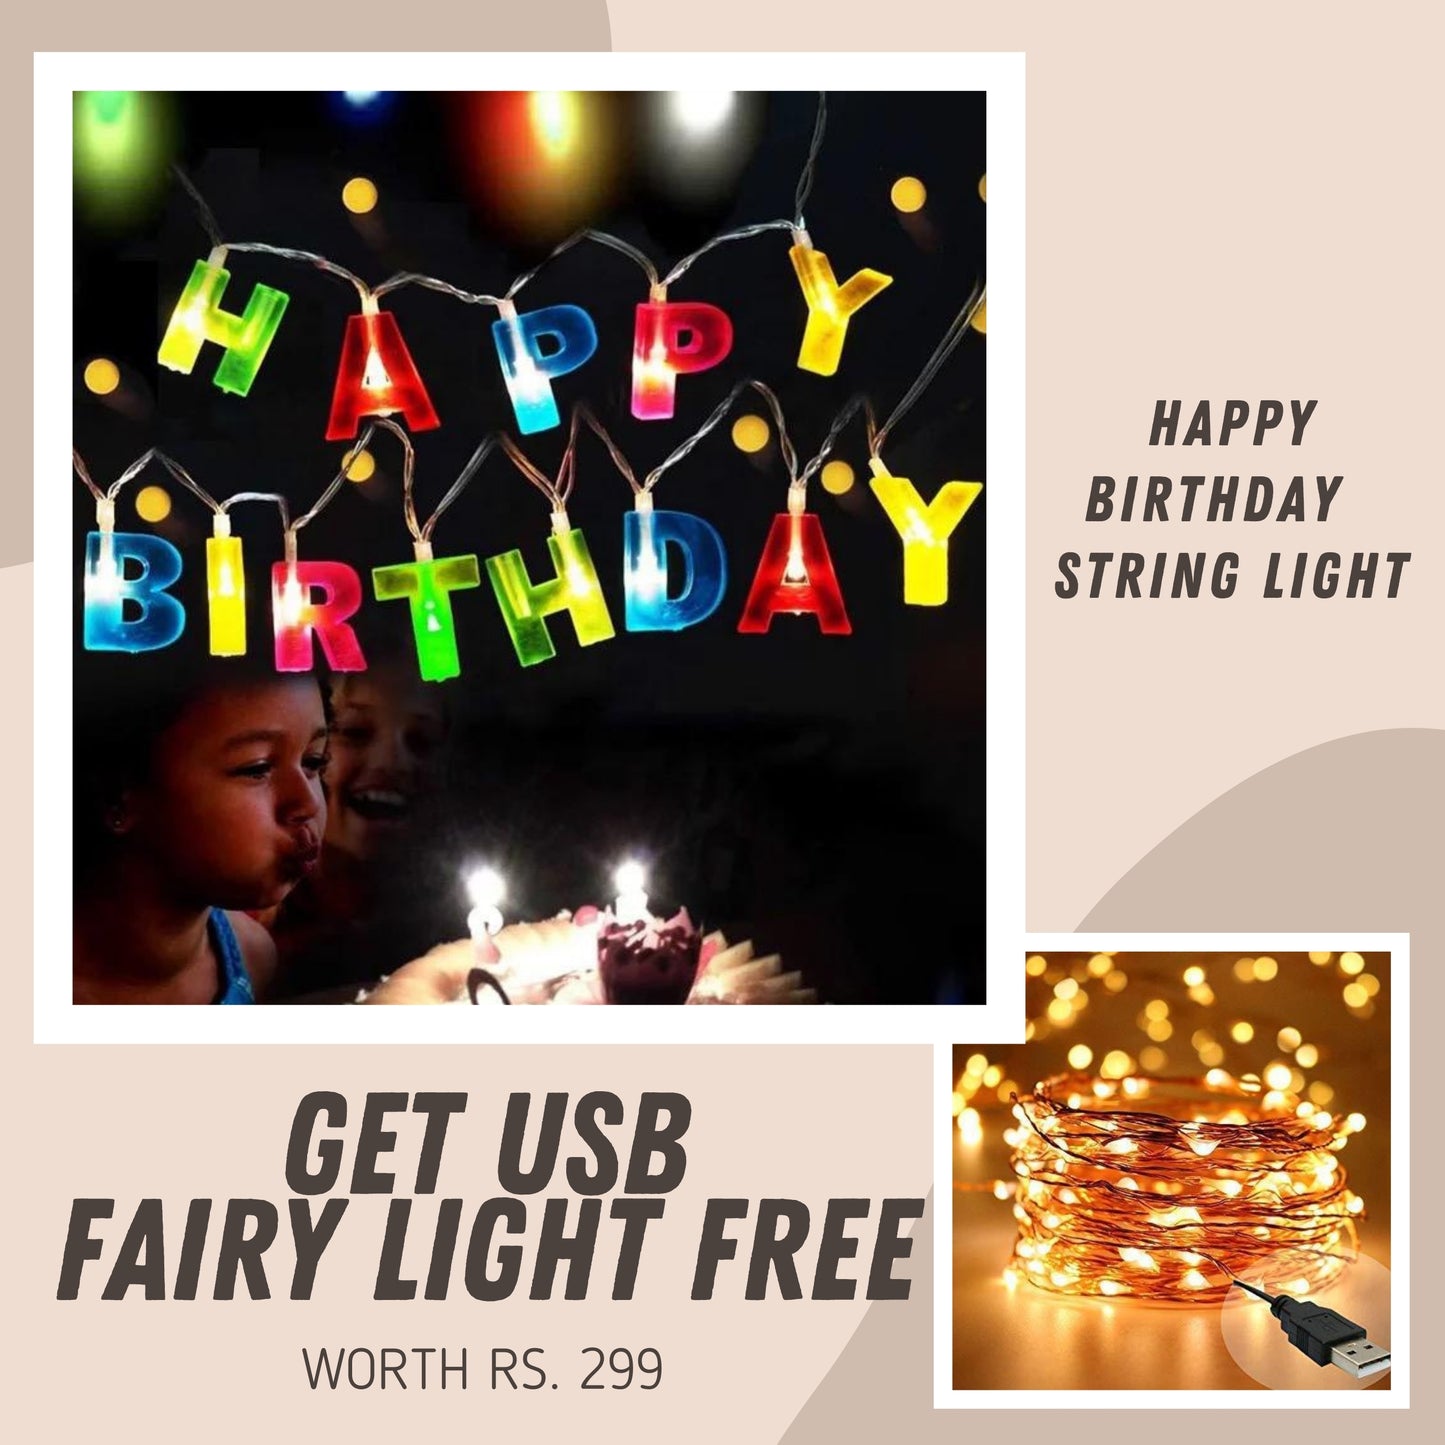 HAPPY BIRTHDAY String light + ( GET FREE 10M USB FAIRY LIGHT )